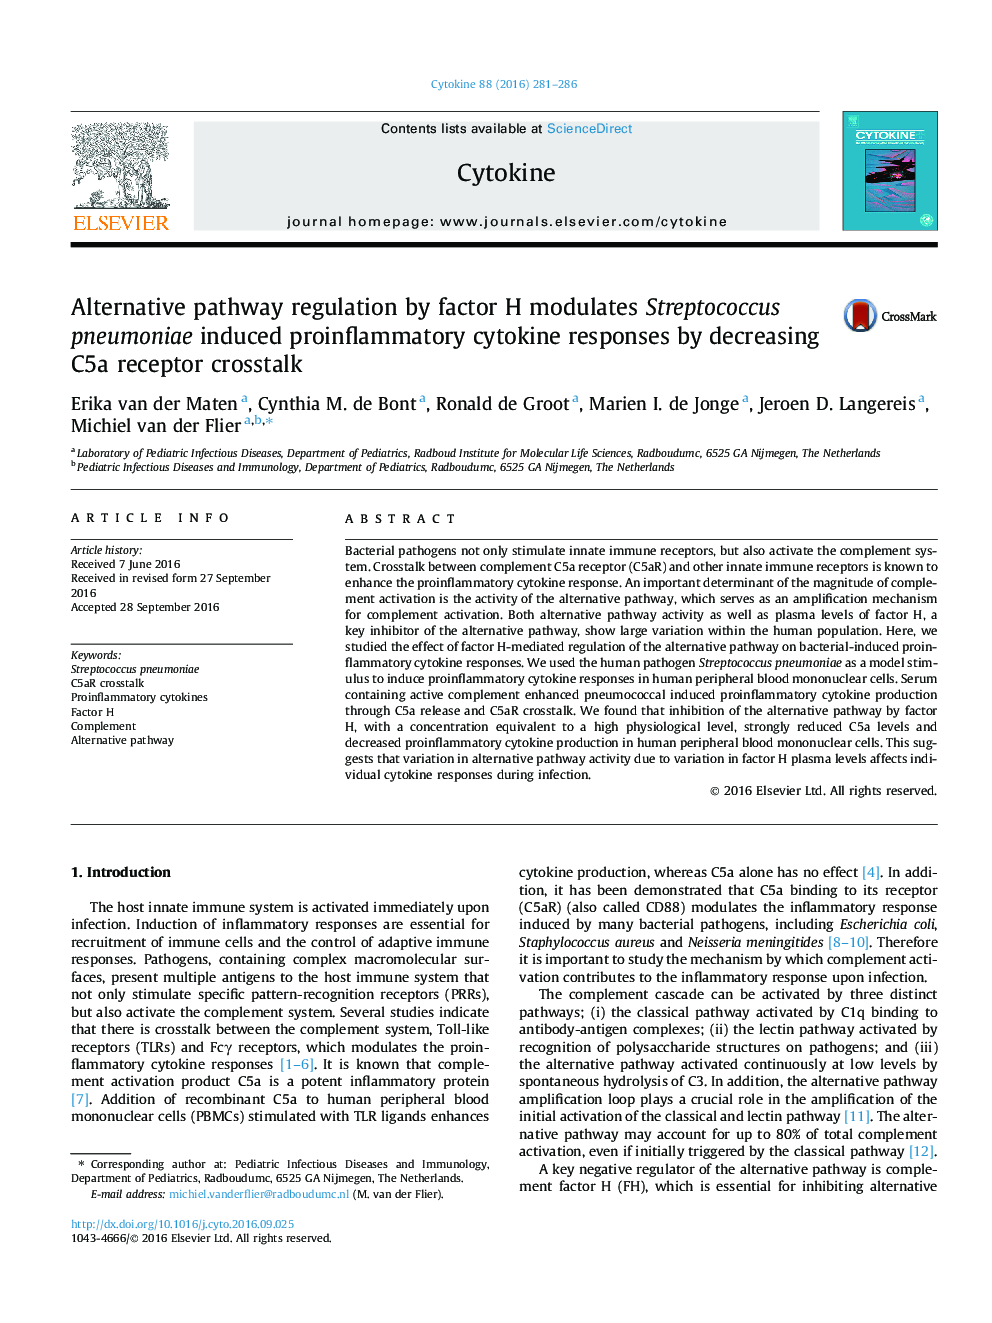 Alternative pathway regulation by factor H modulates Streptococcus pneumoniae induced proinflammatory cytokine responses by decreasing C5a receptor crosstalk